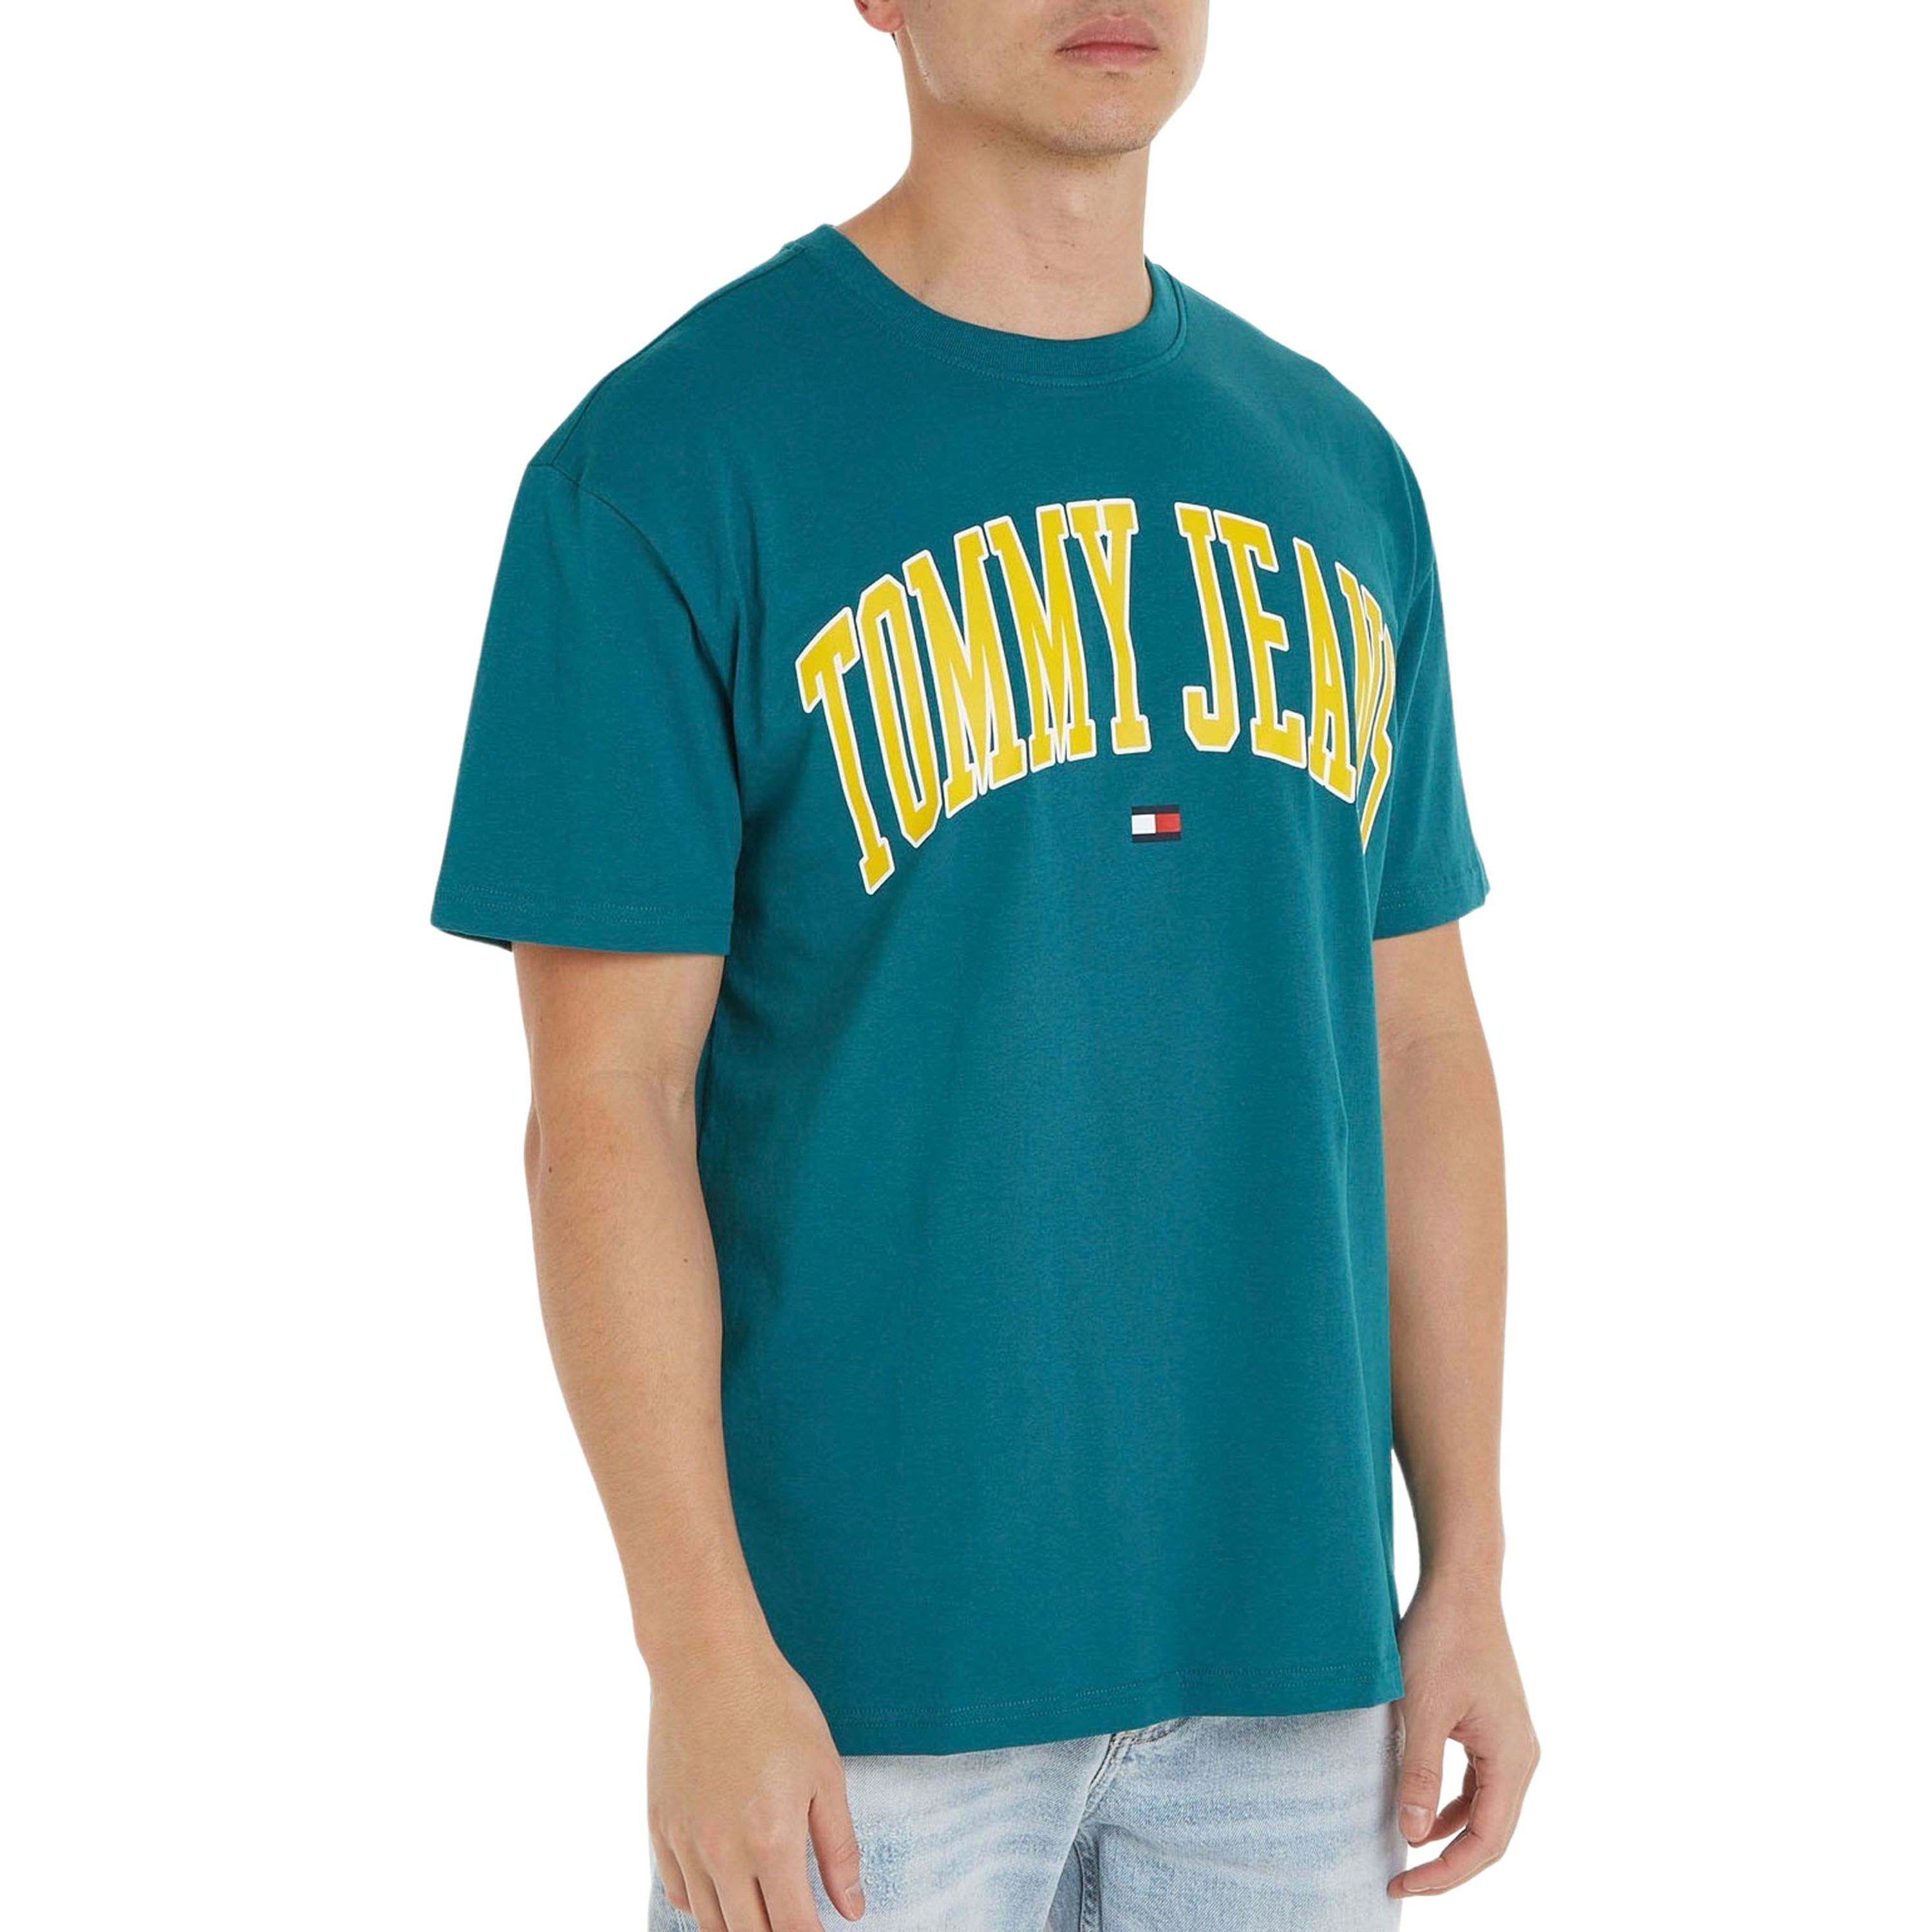 TOMMY JEANS Heren Polo's & T-shirts Tjm Reg Popcolor Varsity Tee Groen